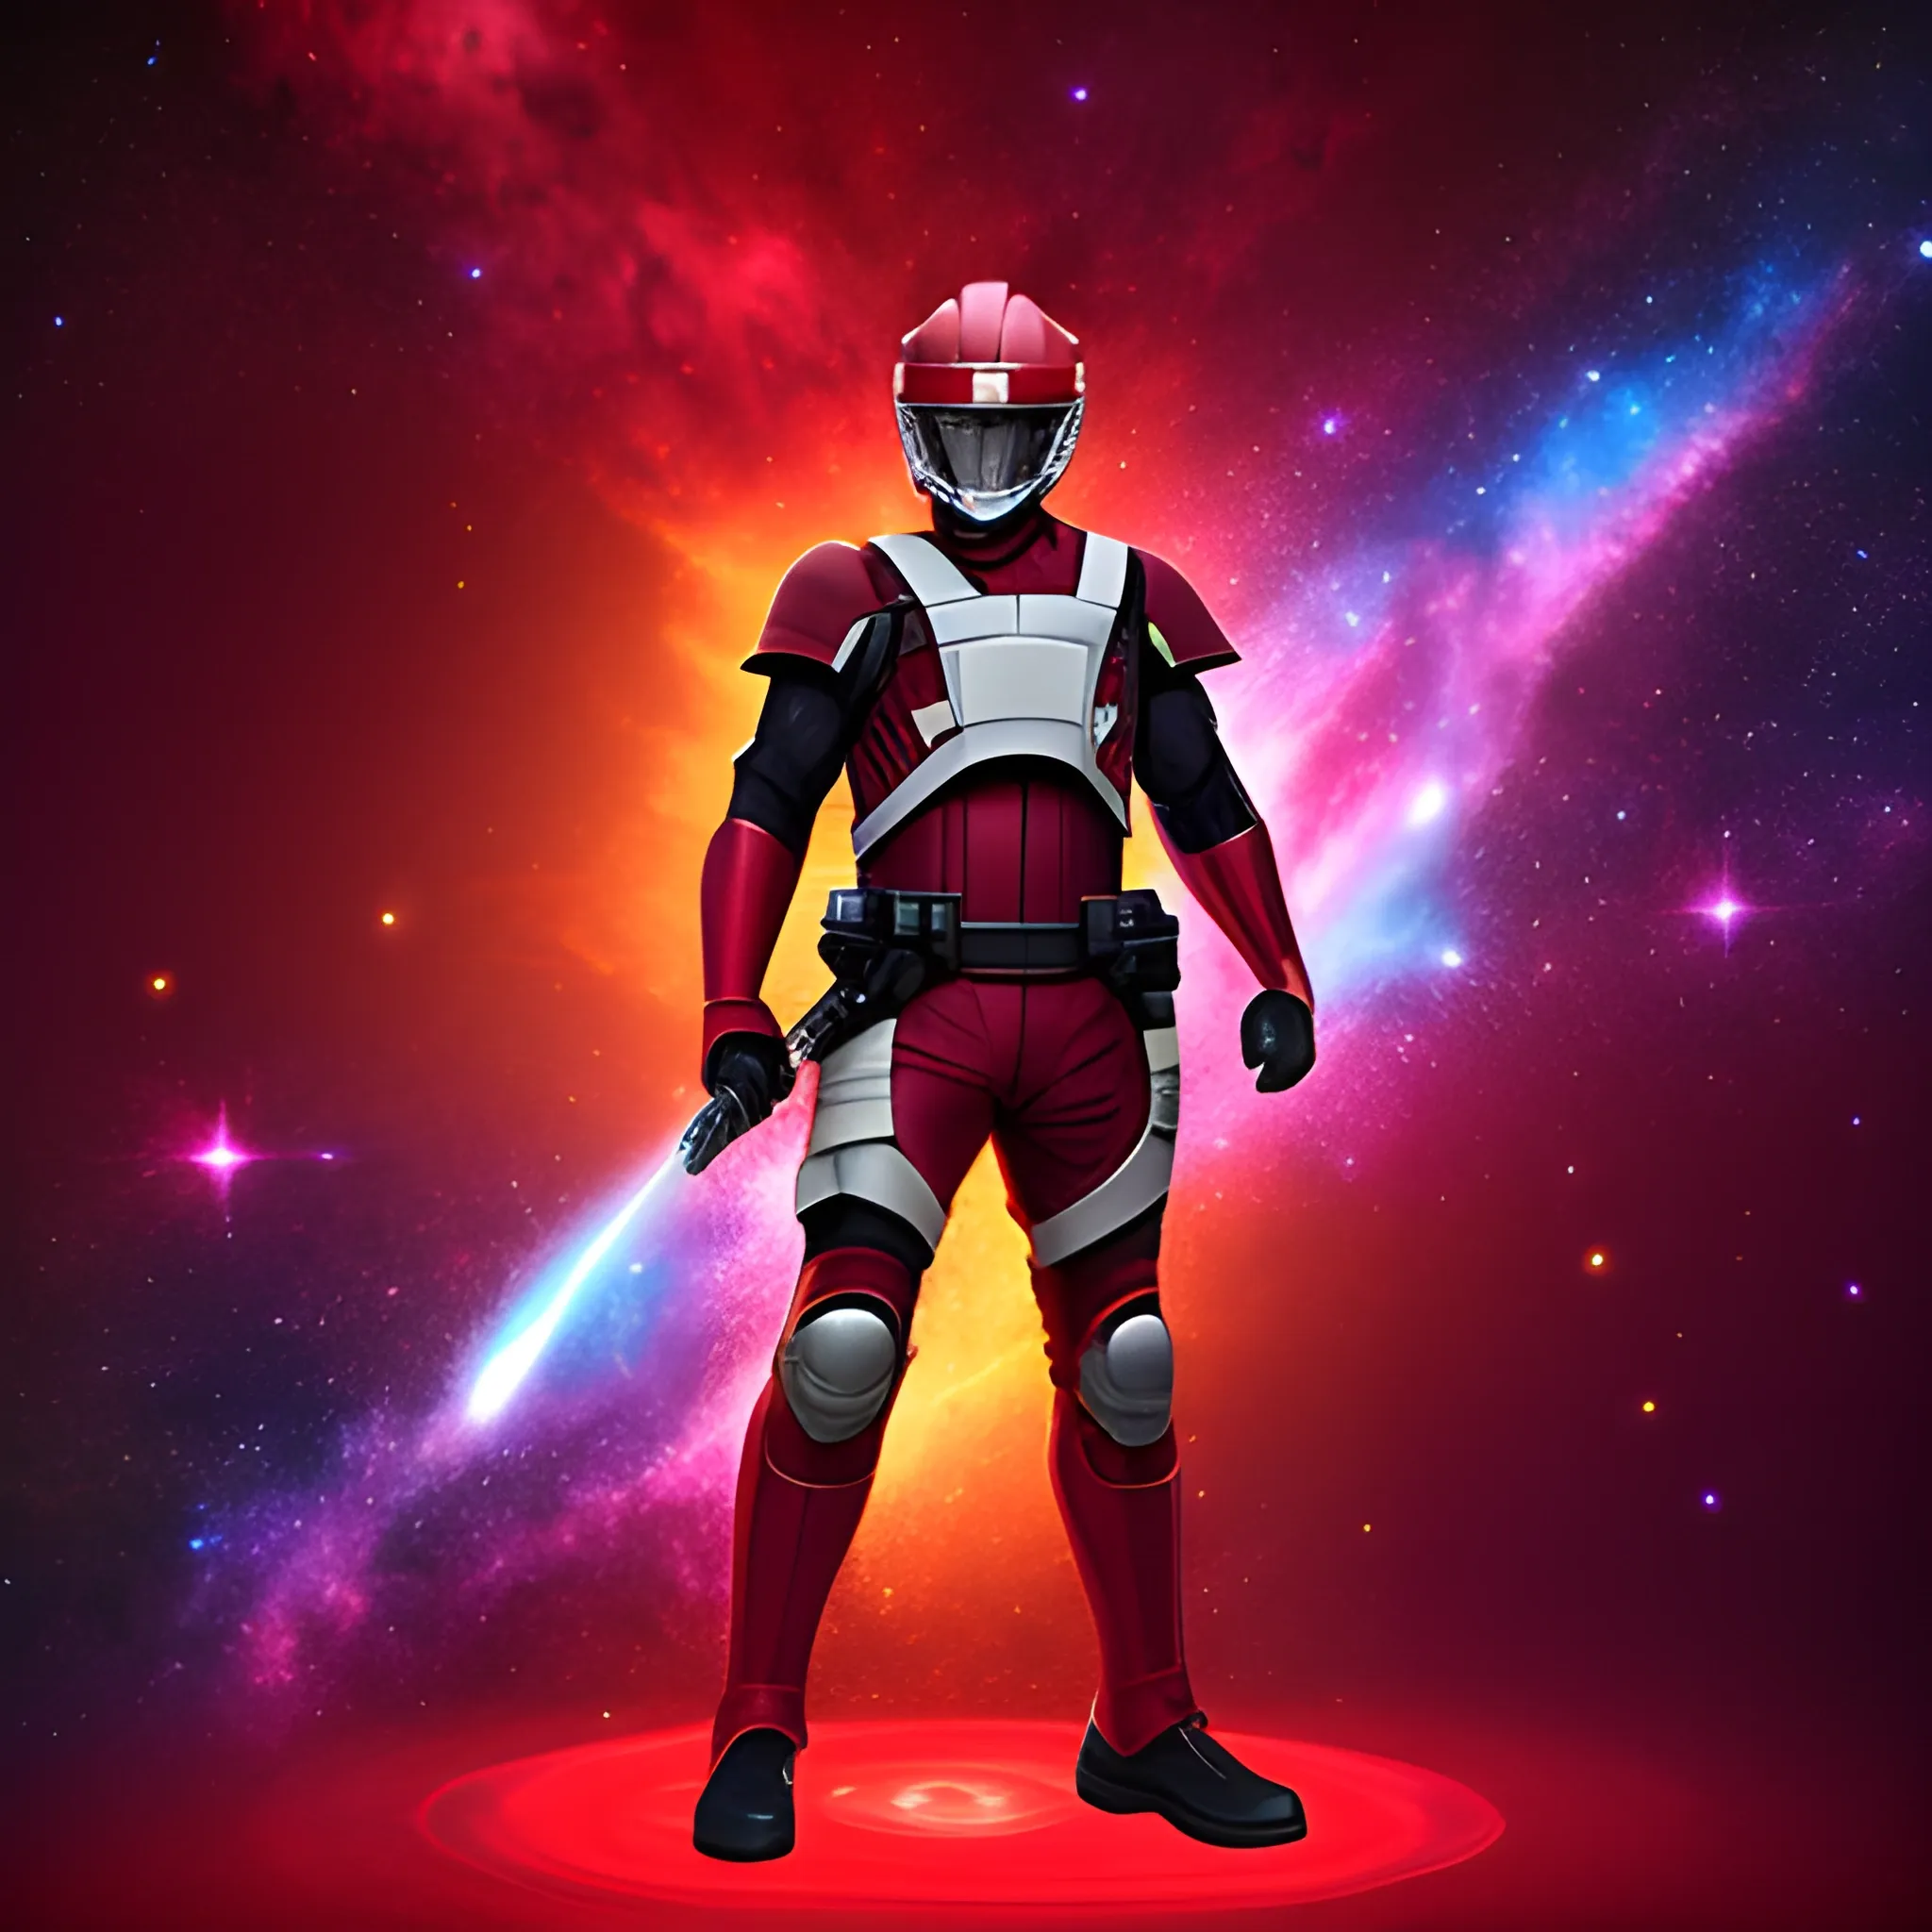 Powe Ranger, red, galaxy background 